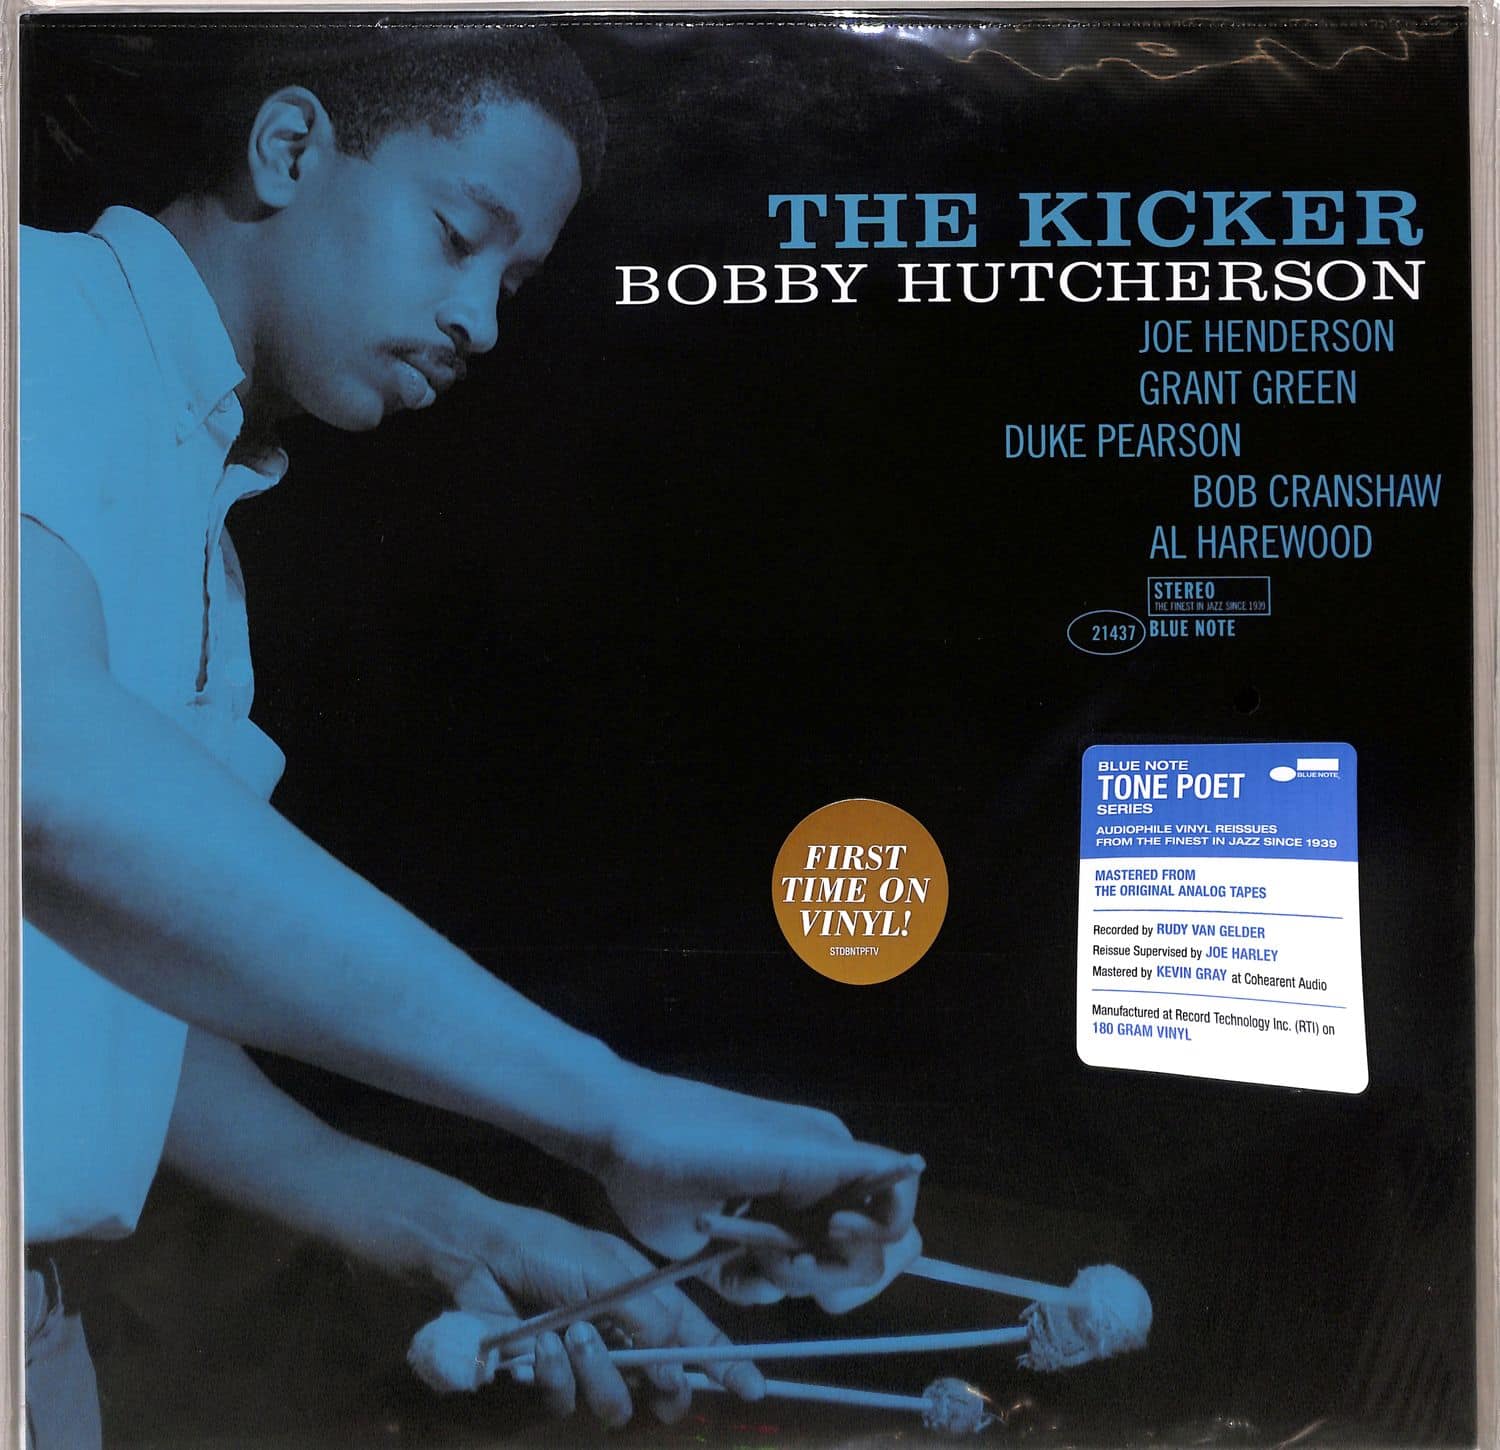 Bobby Hutcherson - THE KICKER 